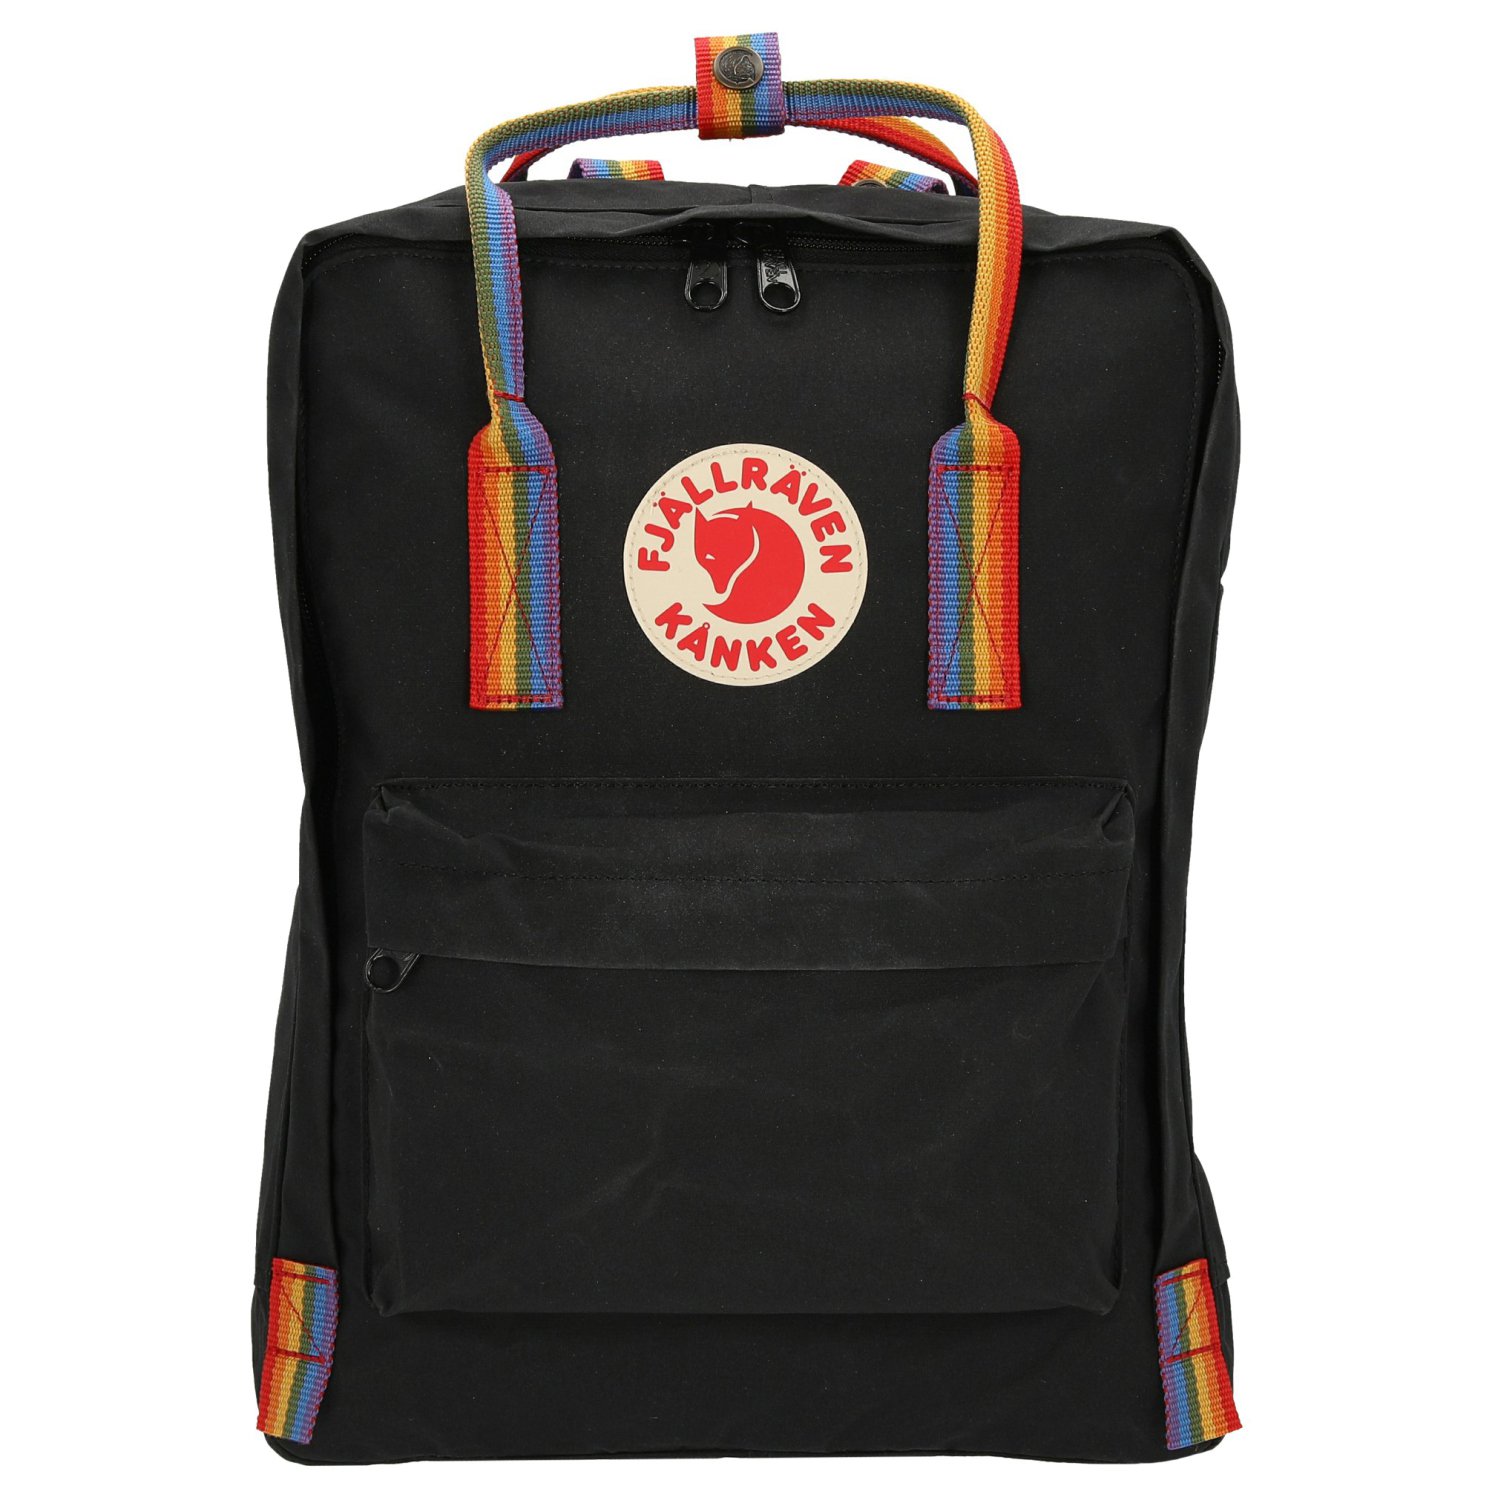 Рюкзак FJÄLLRÄVEN Kånken Rainbow 38 cm, черный